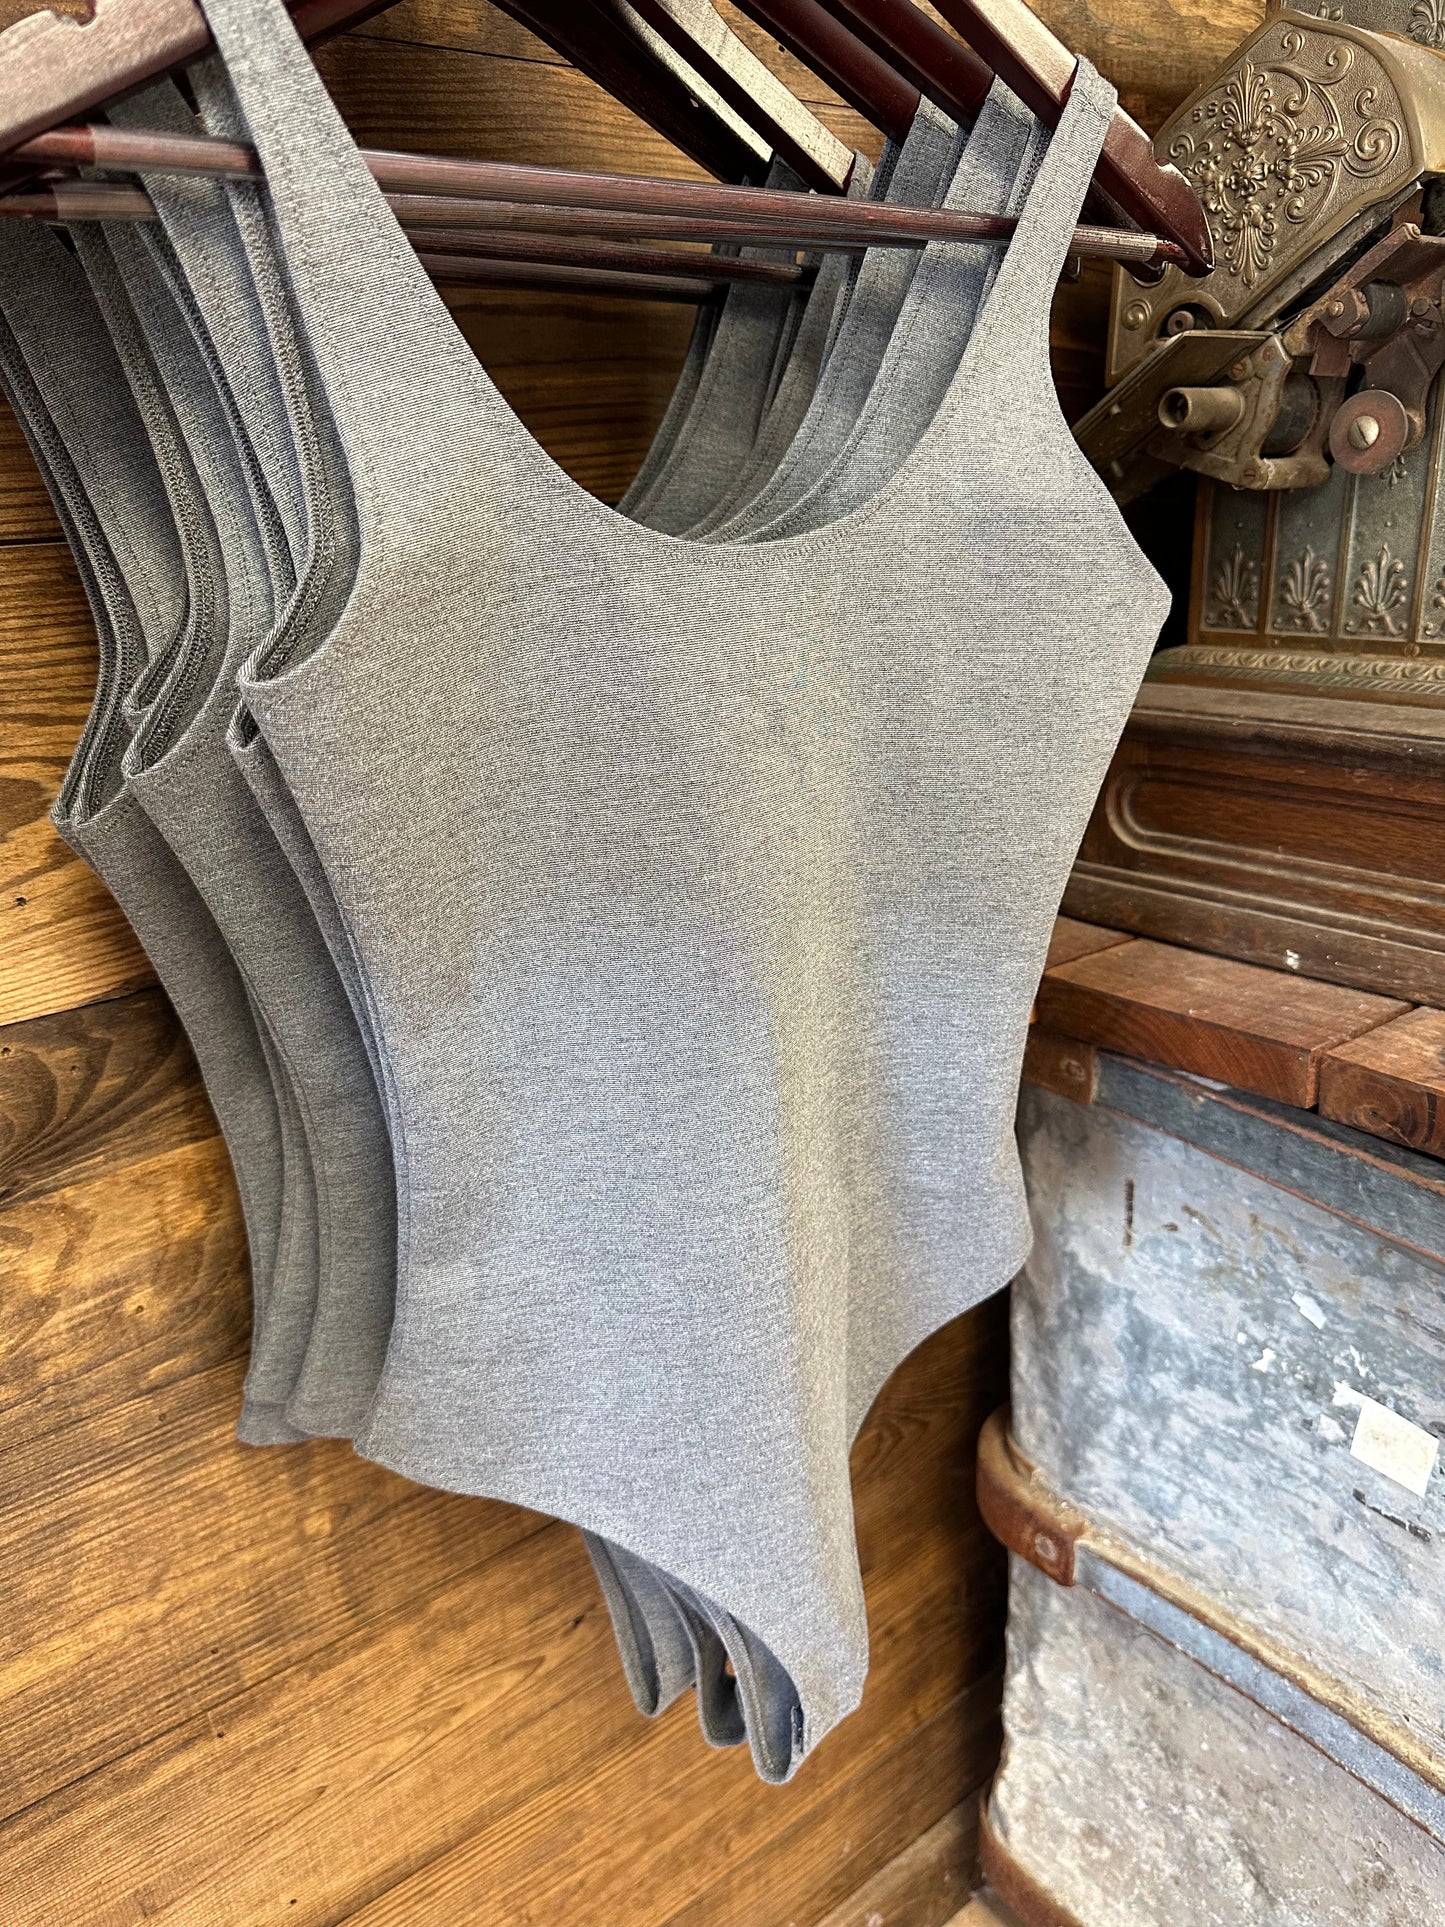 Gray Bodysuit